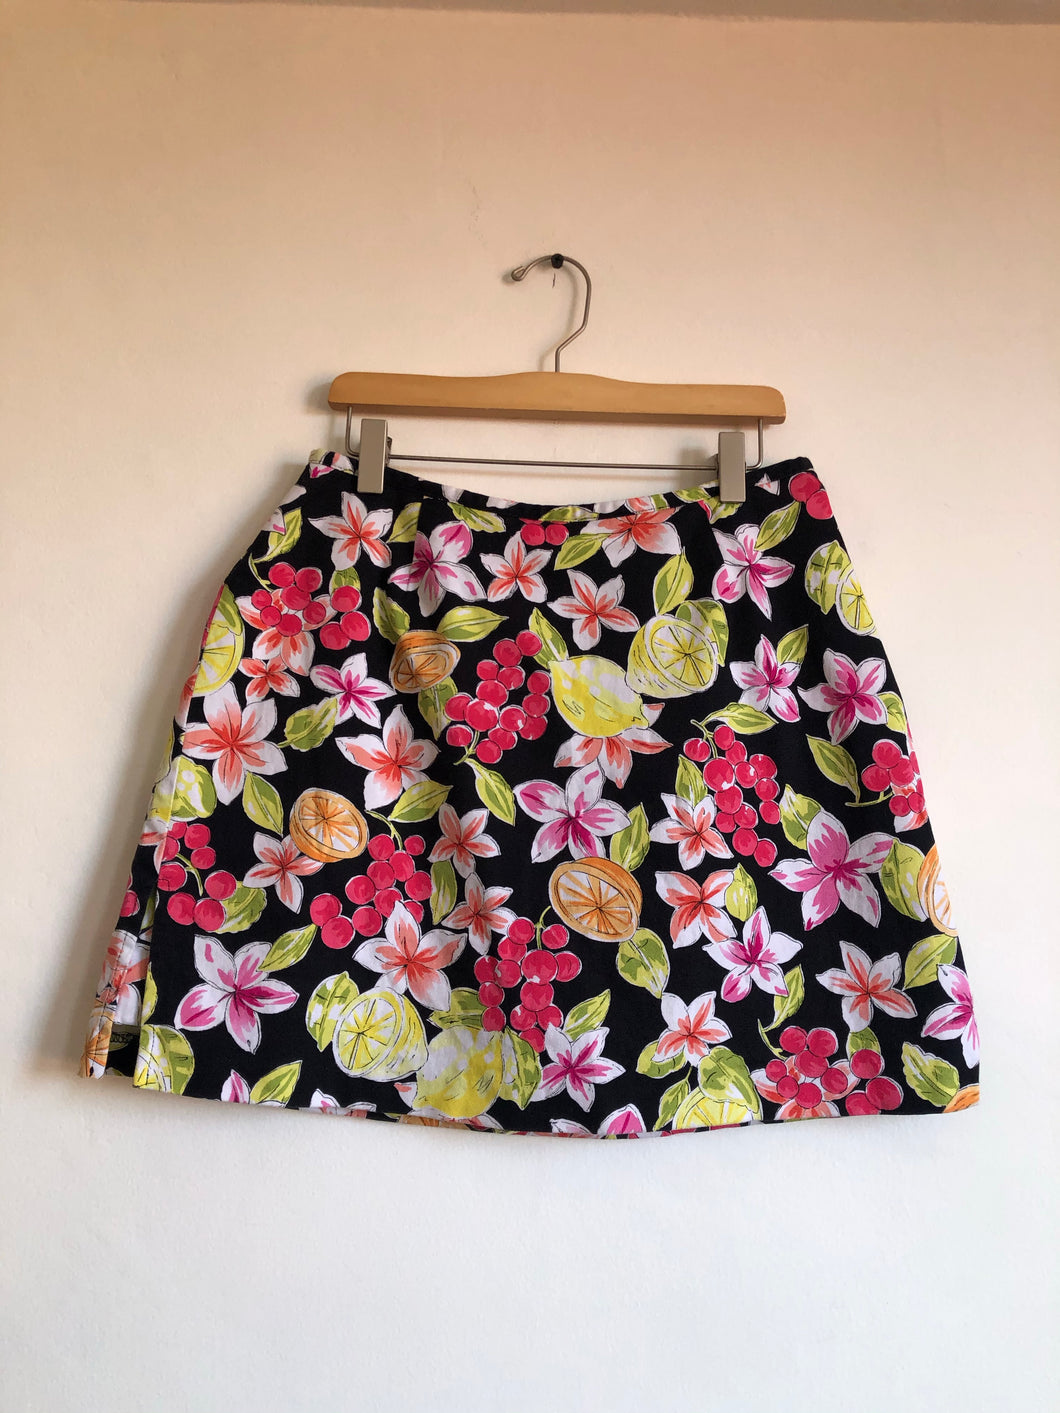 Sixties skirt